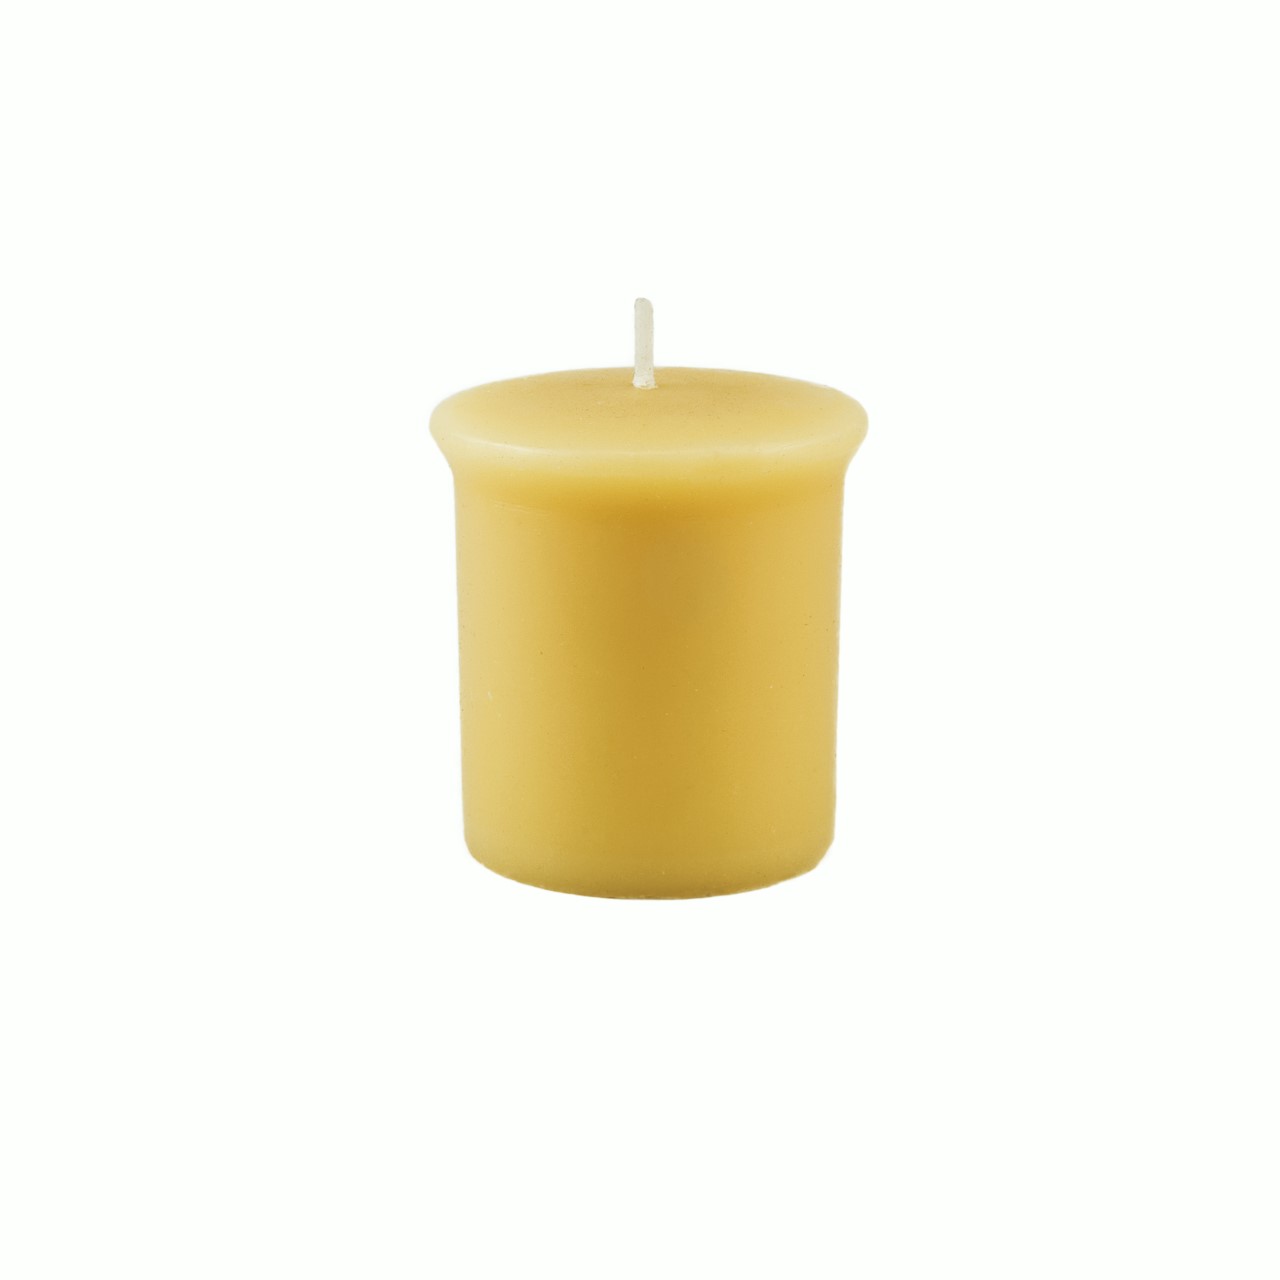 Pure Beeswax Handmade Votive Candles - Eco-friendly Home Decor